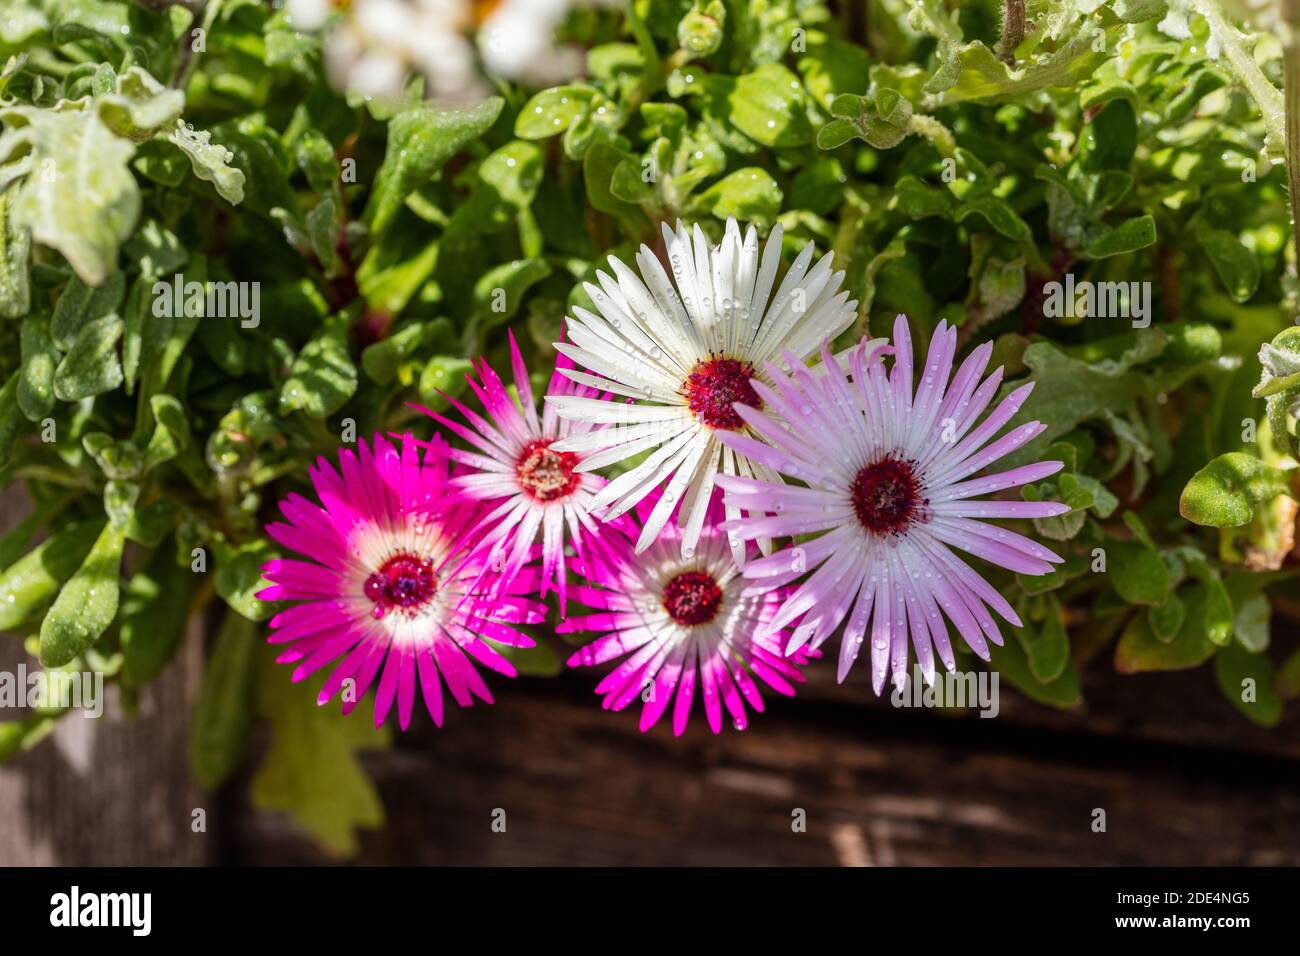 Livingstone daisy, Stor doroteablomma (Cleretum bellidiforme) Stock Photo